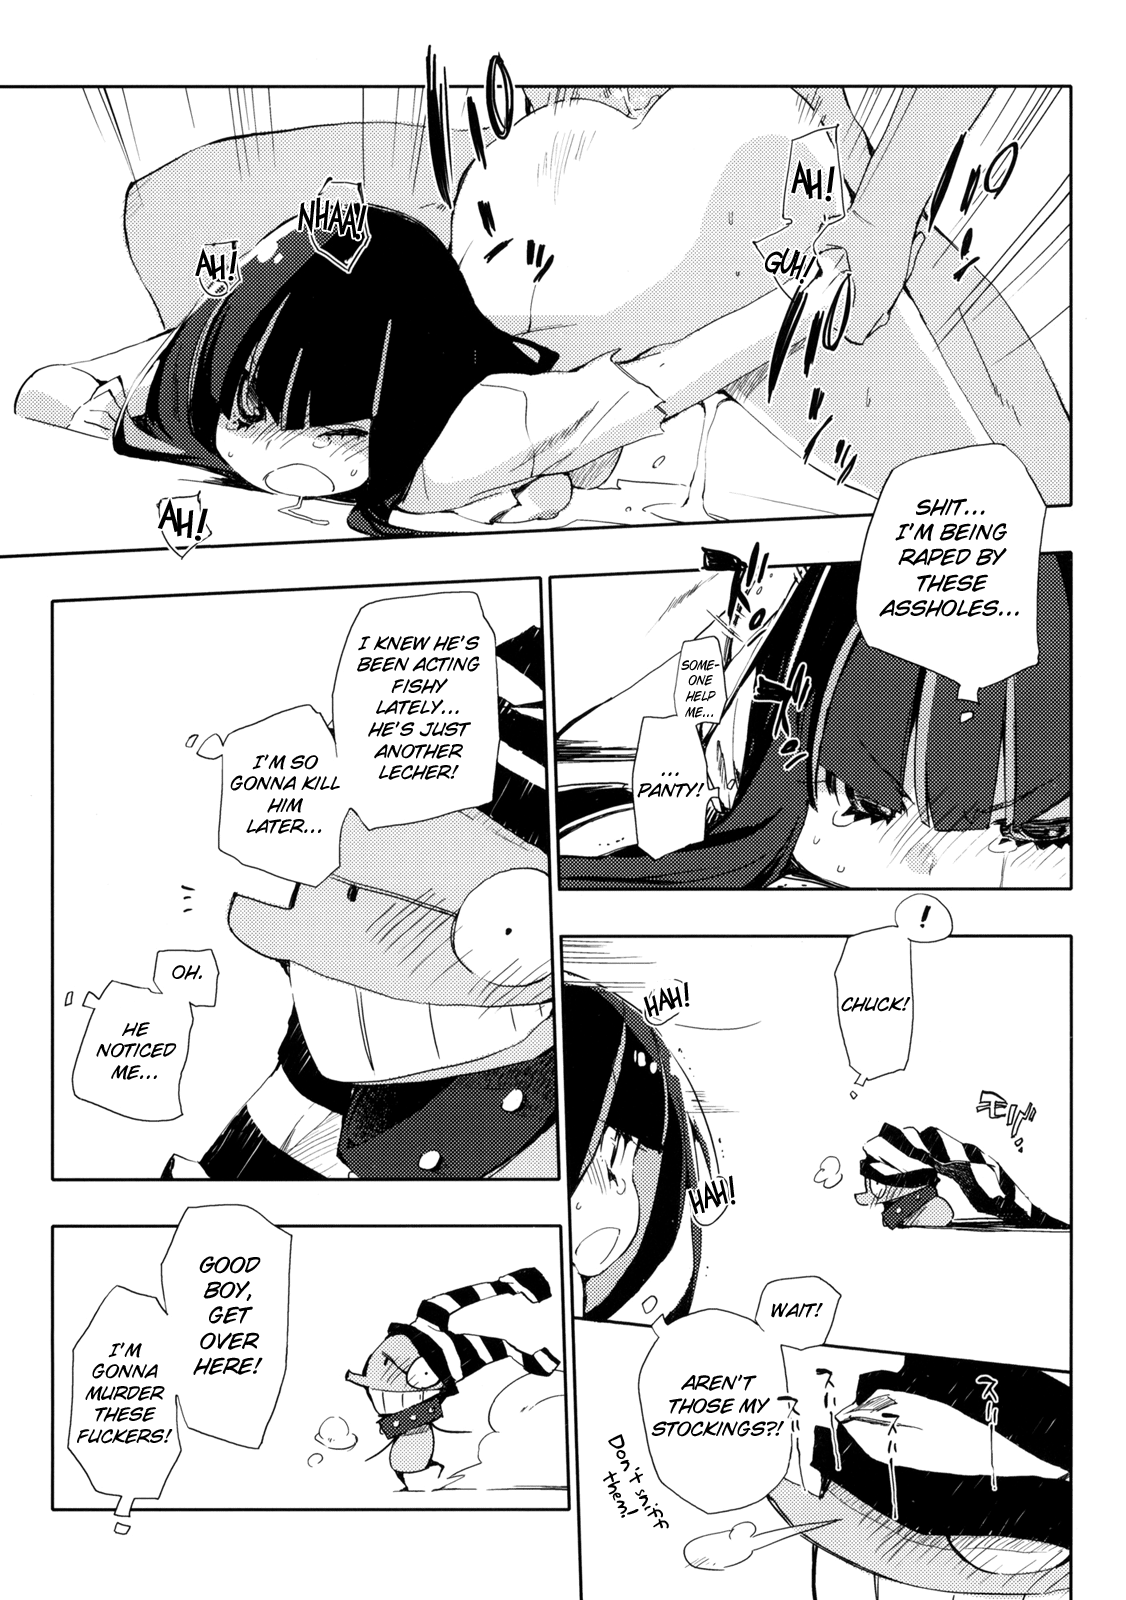 inmoral unmoral hentai manga picture 15